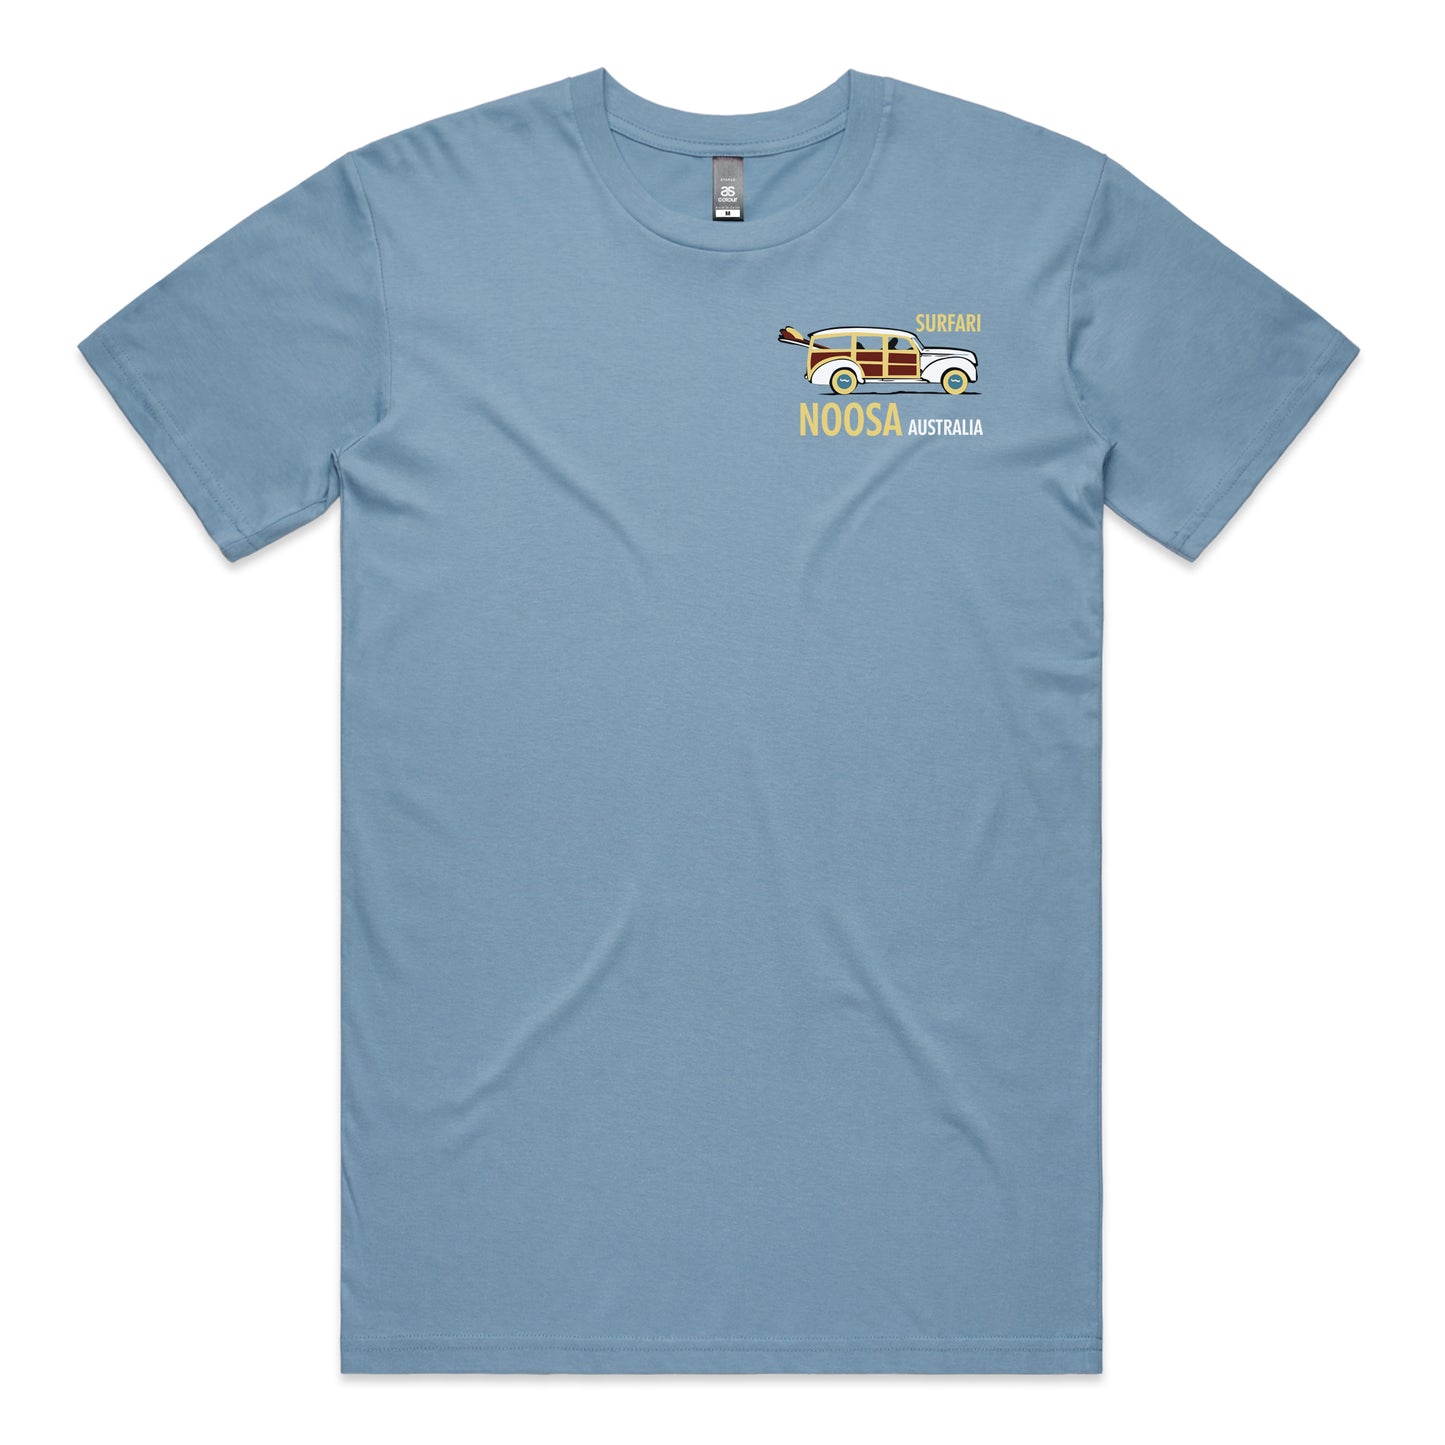 Noosa Surfari T-shirt - Carolina Blue